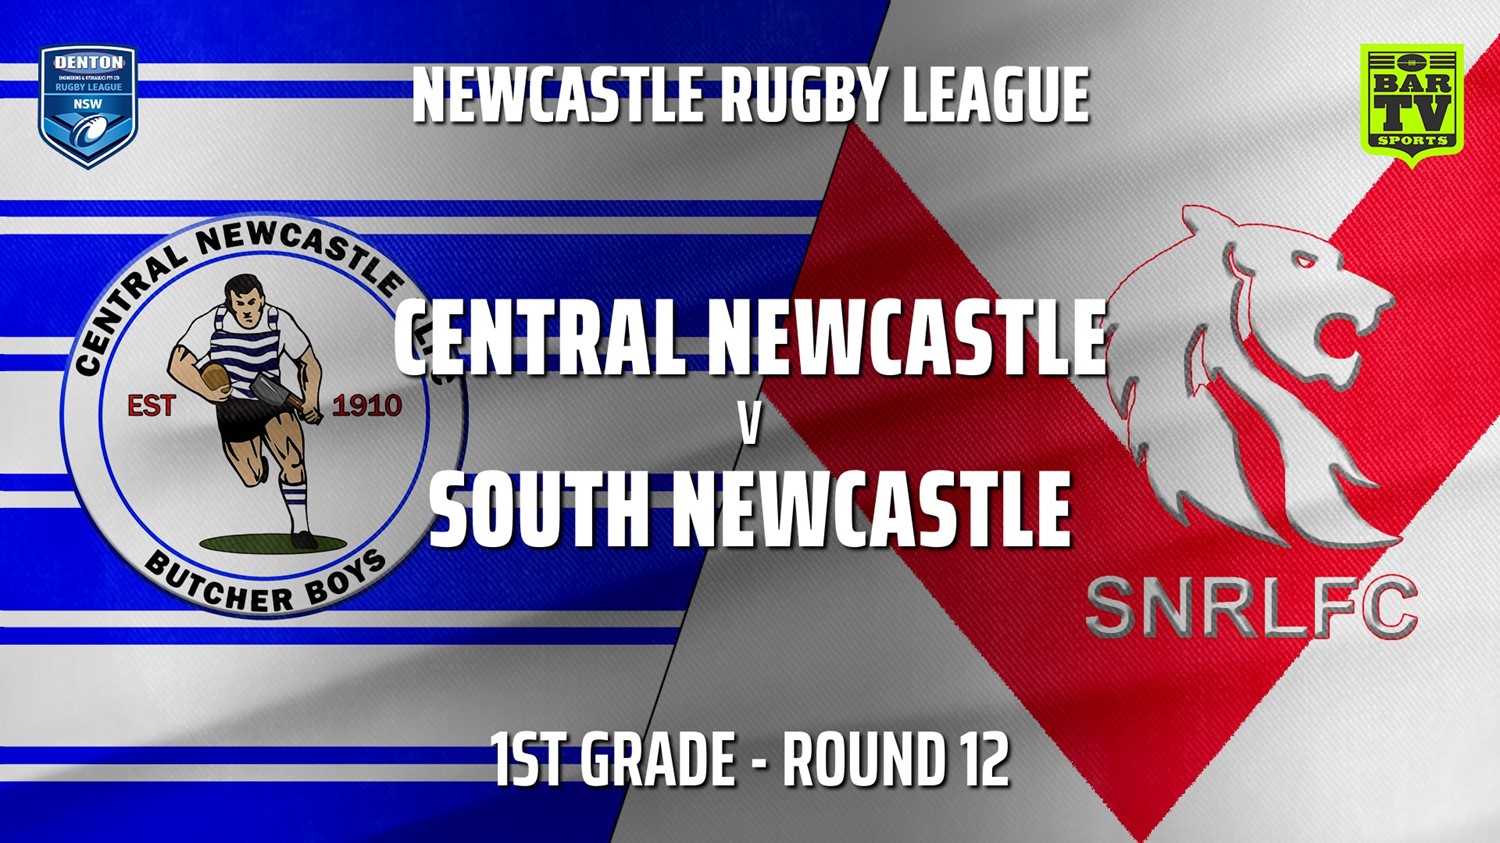 210620-Newcastle Round 12 - 1st Grade - Central Newcastle v South Newcastle Slate Image